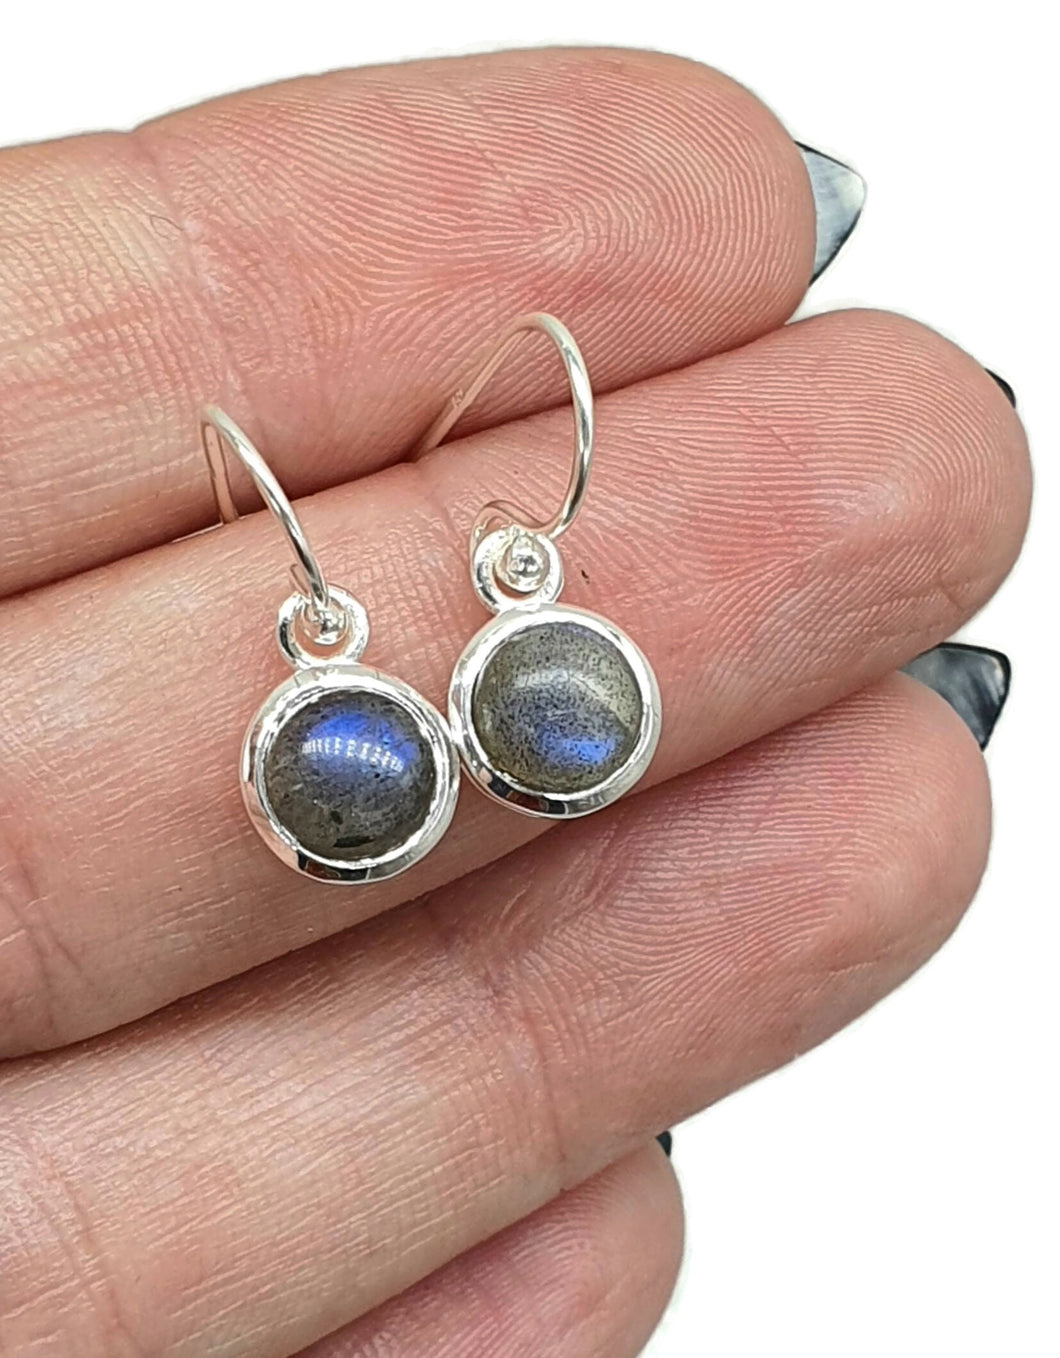 Labradorite Earrings, Round Shaped, Sterling Silver, Blue Labradorite - GemzAustralia 